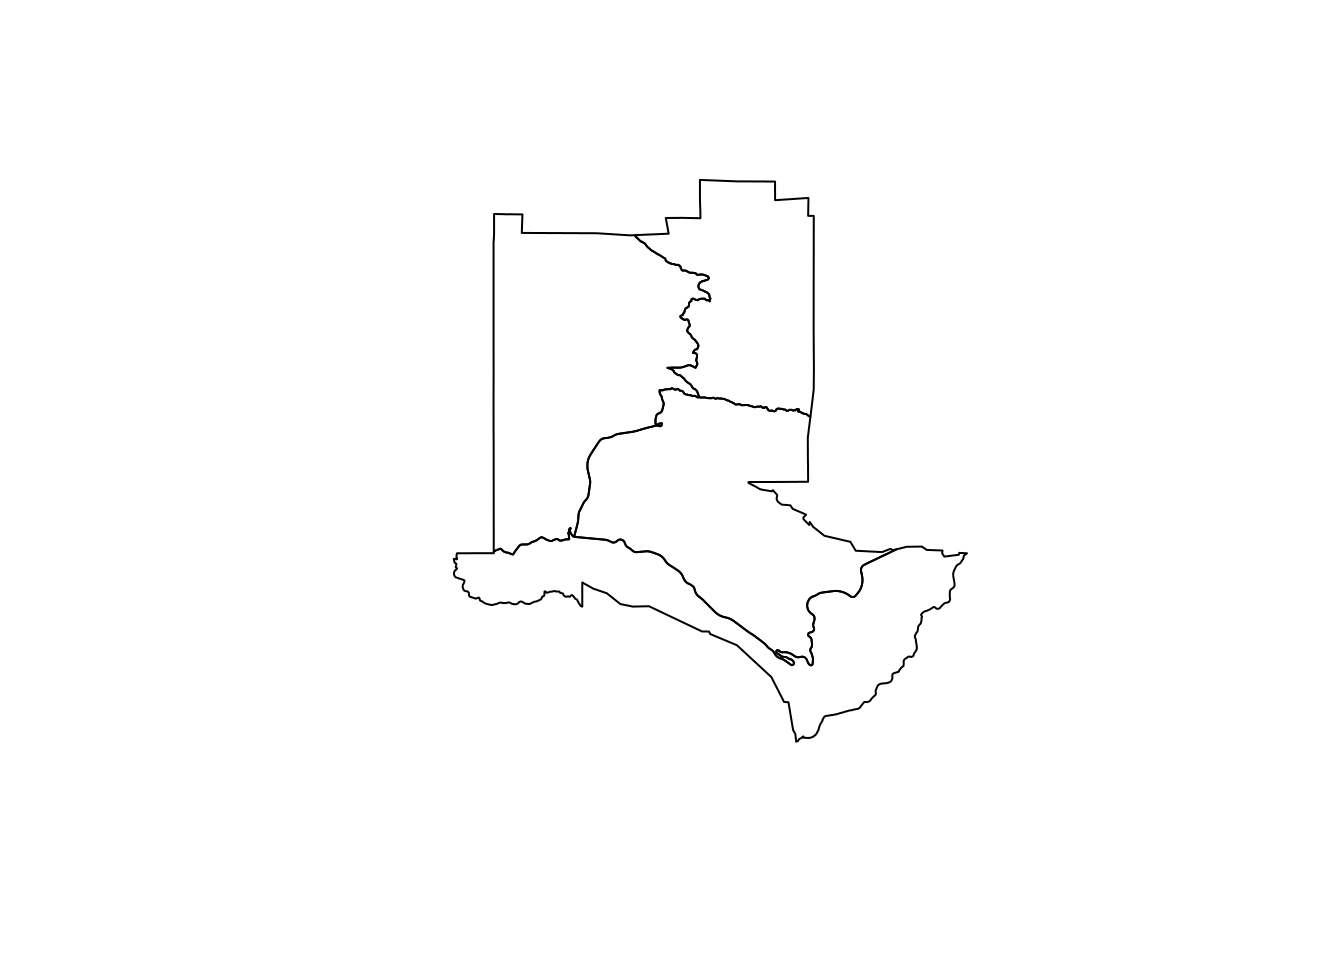 Census tract boundaries in Los Alamos County, NM